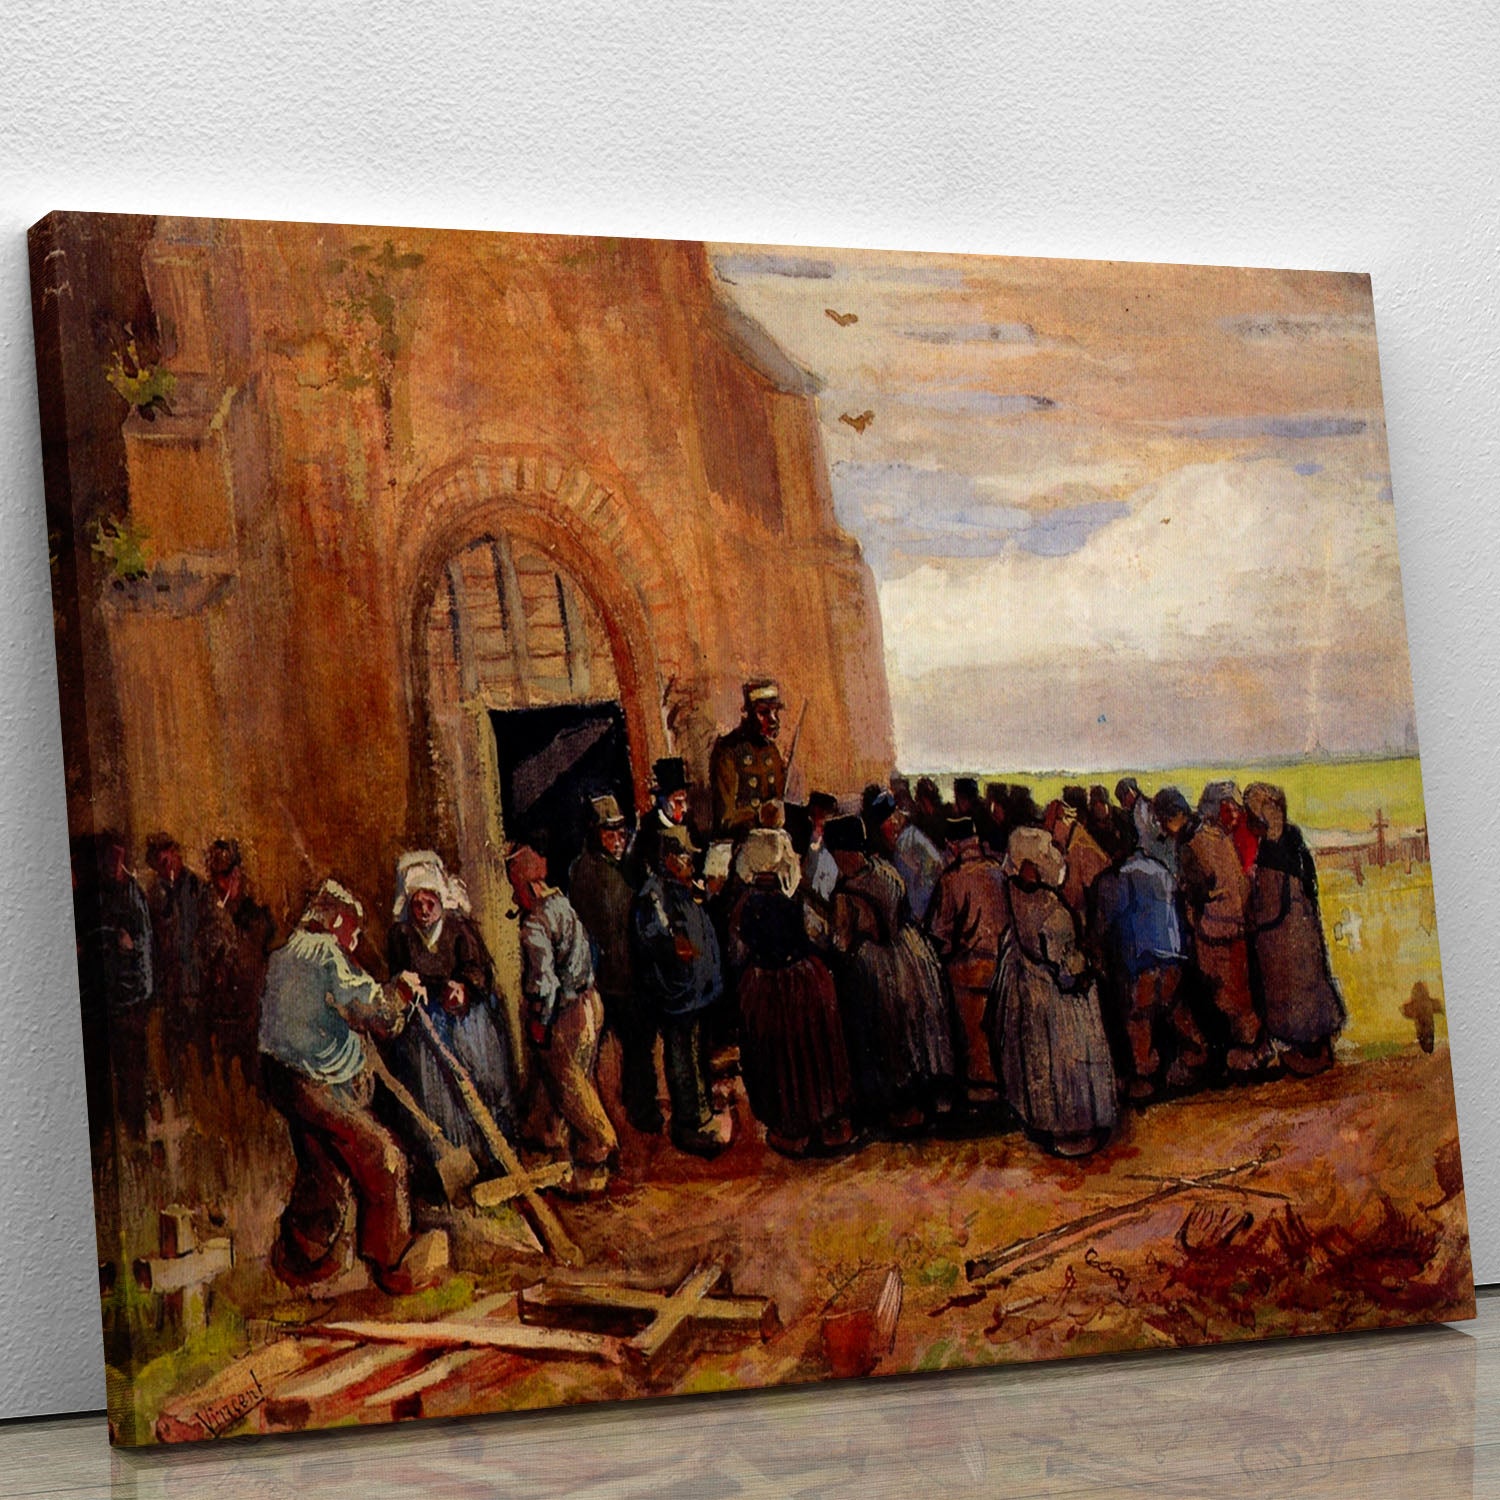 Sale of Building Scrap by Van Gogh Canvas Print or Poster - Canvas Art Rocks - 1